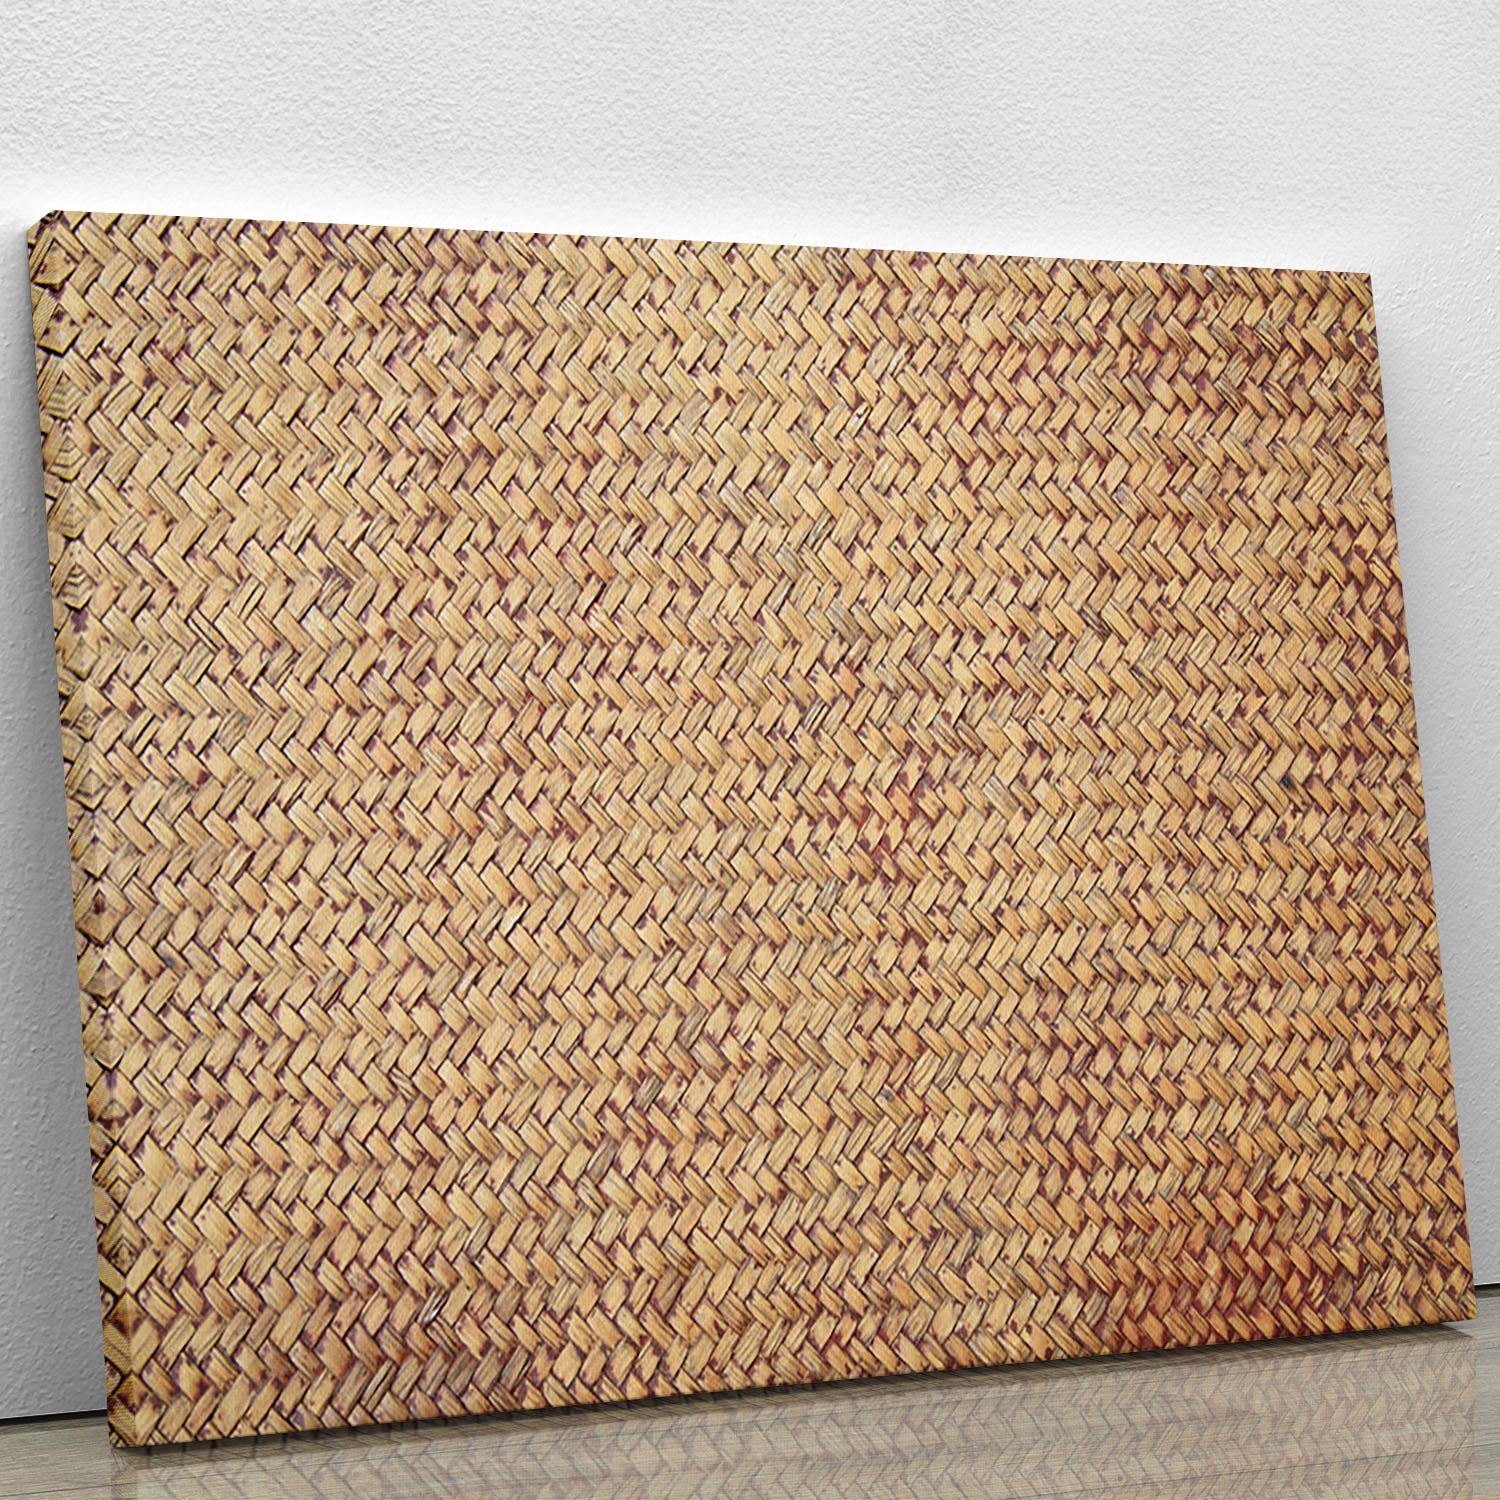 Brown rattan weave Canvas Print or Poster - Canvas Art Rocks - 1